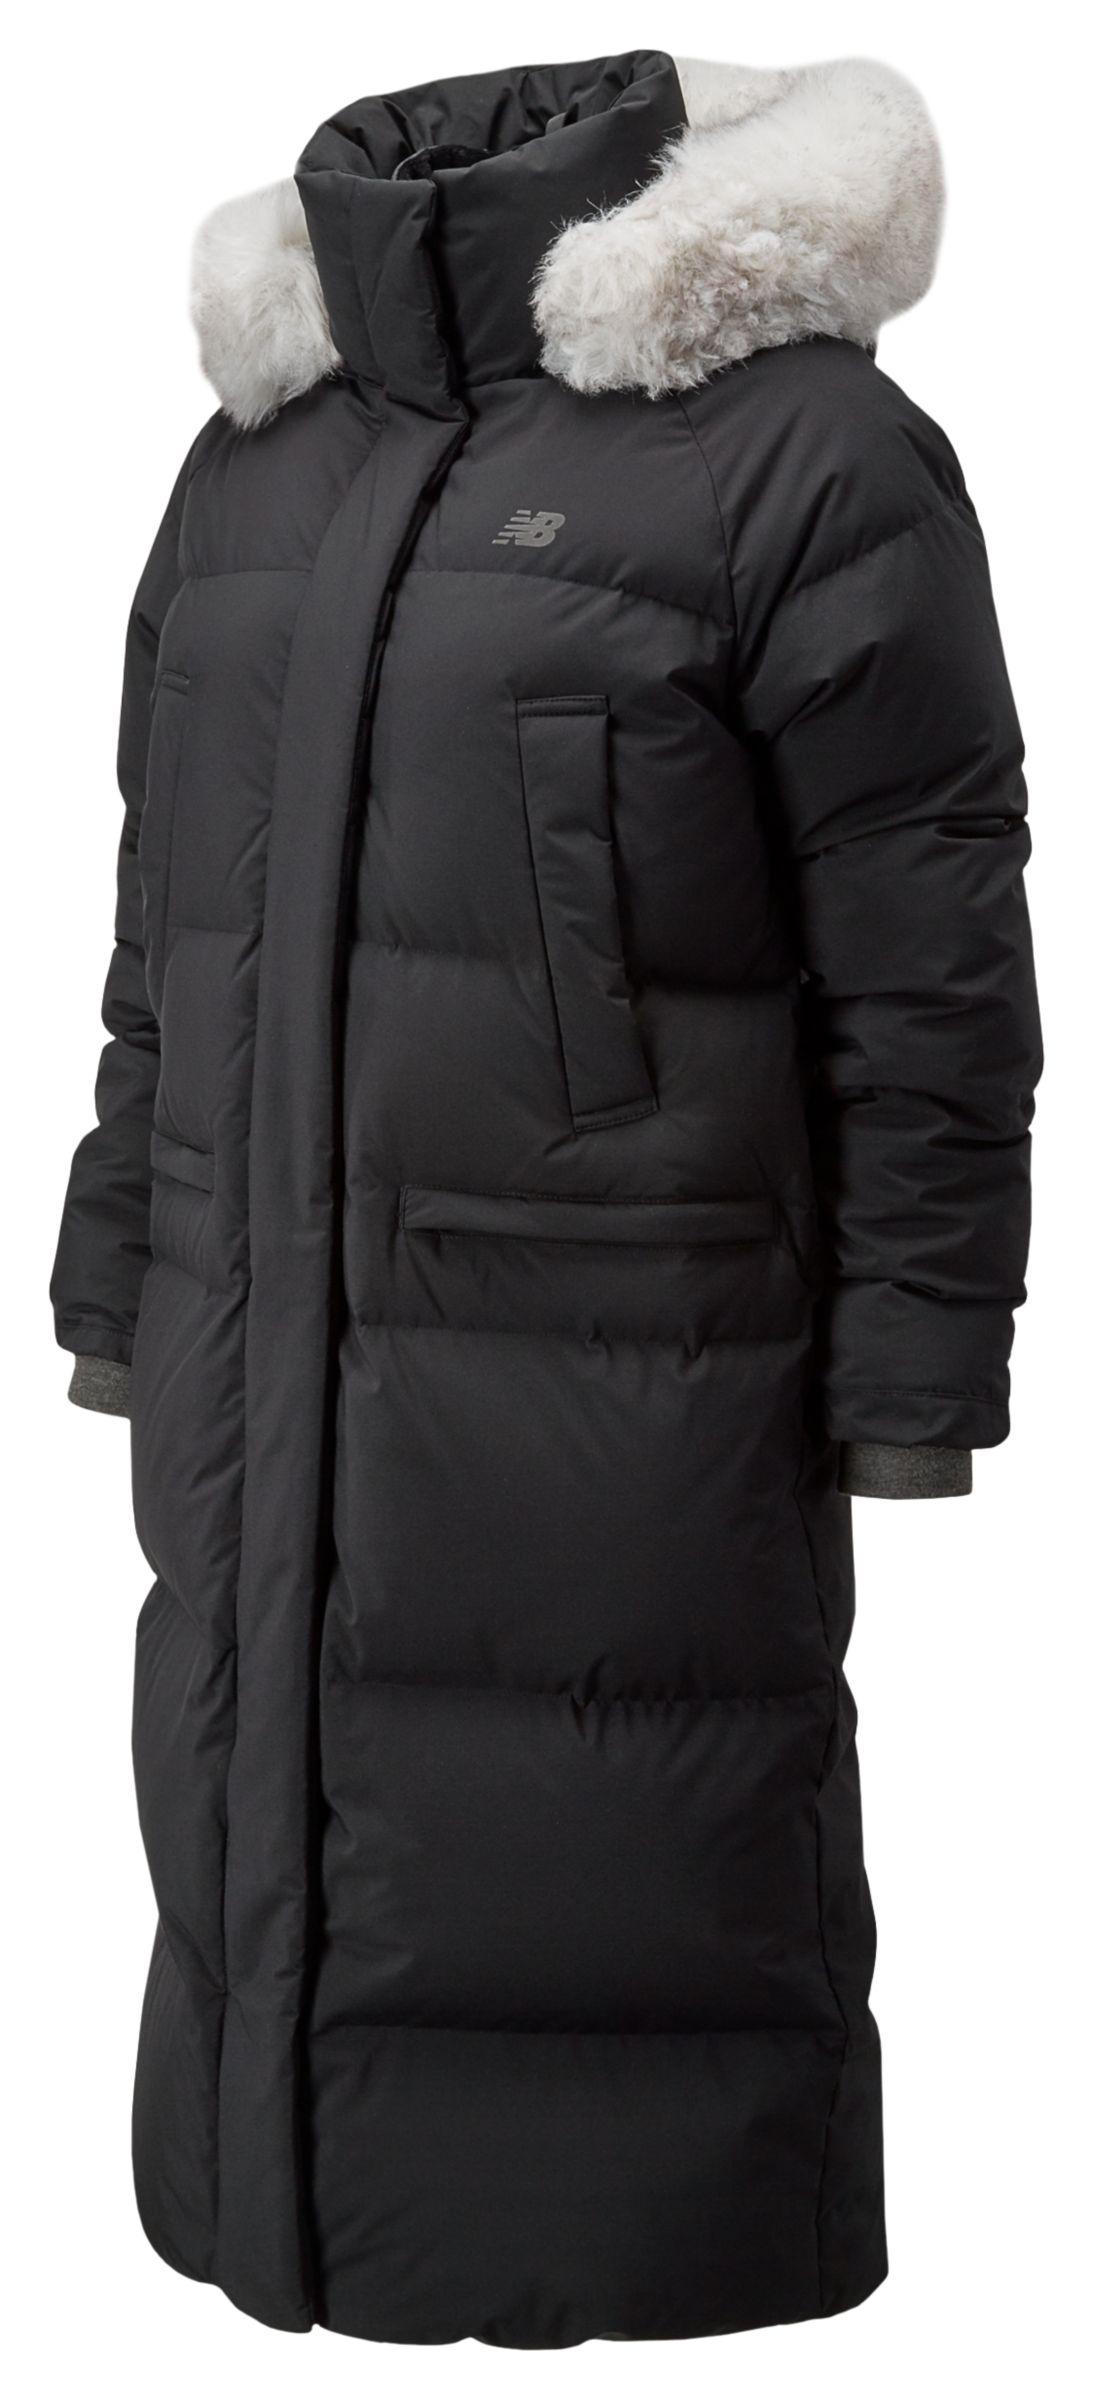 yuna maxi fur down jacket